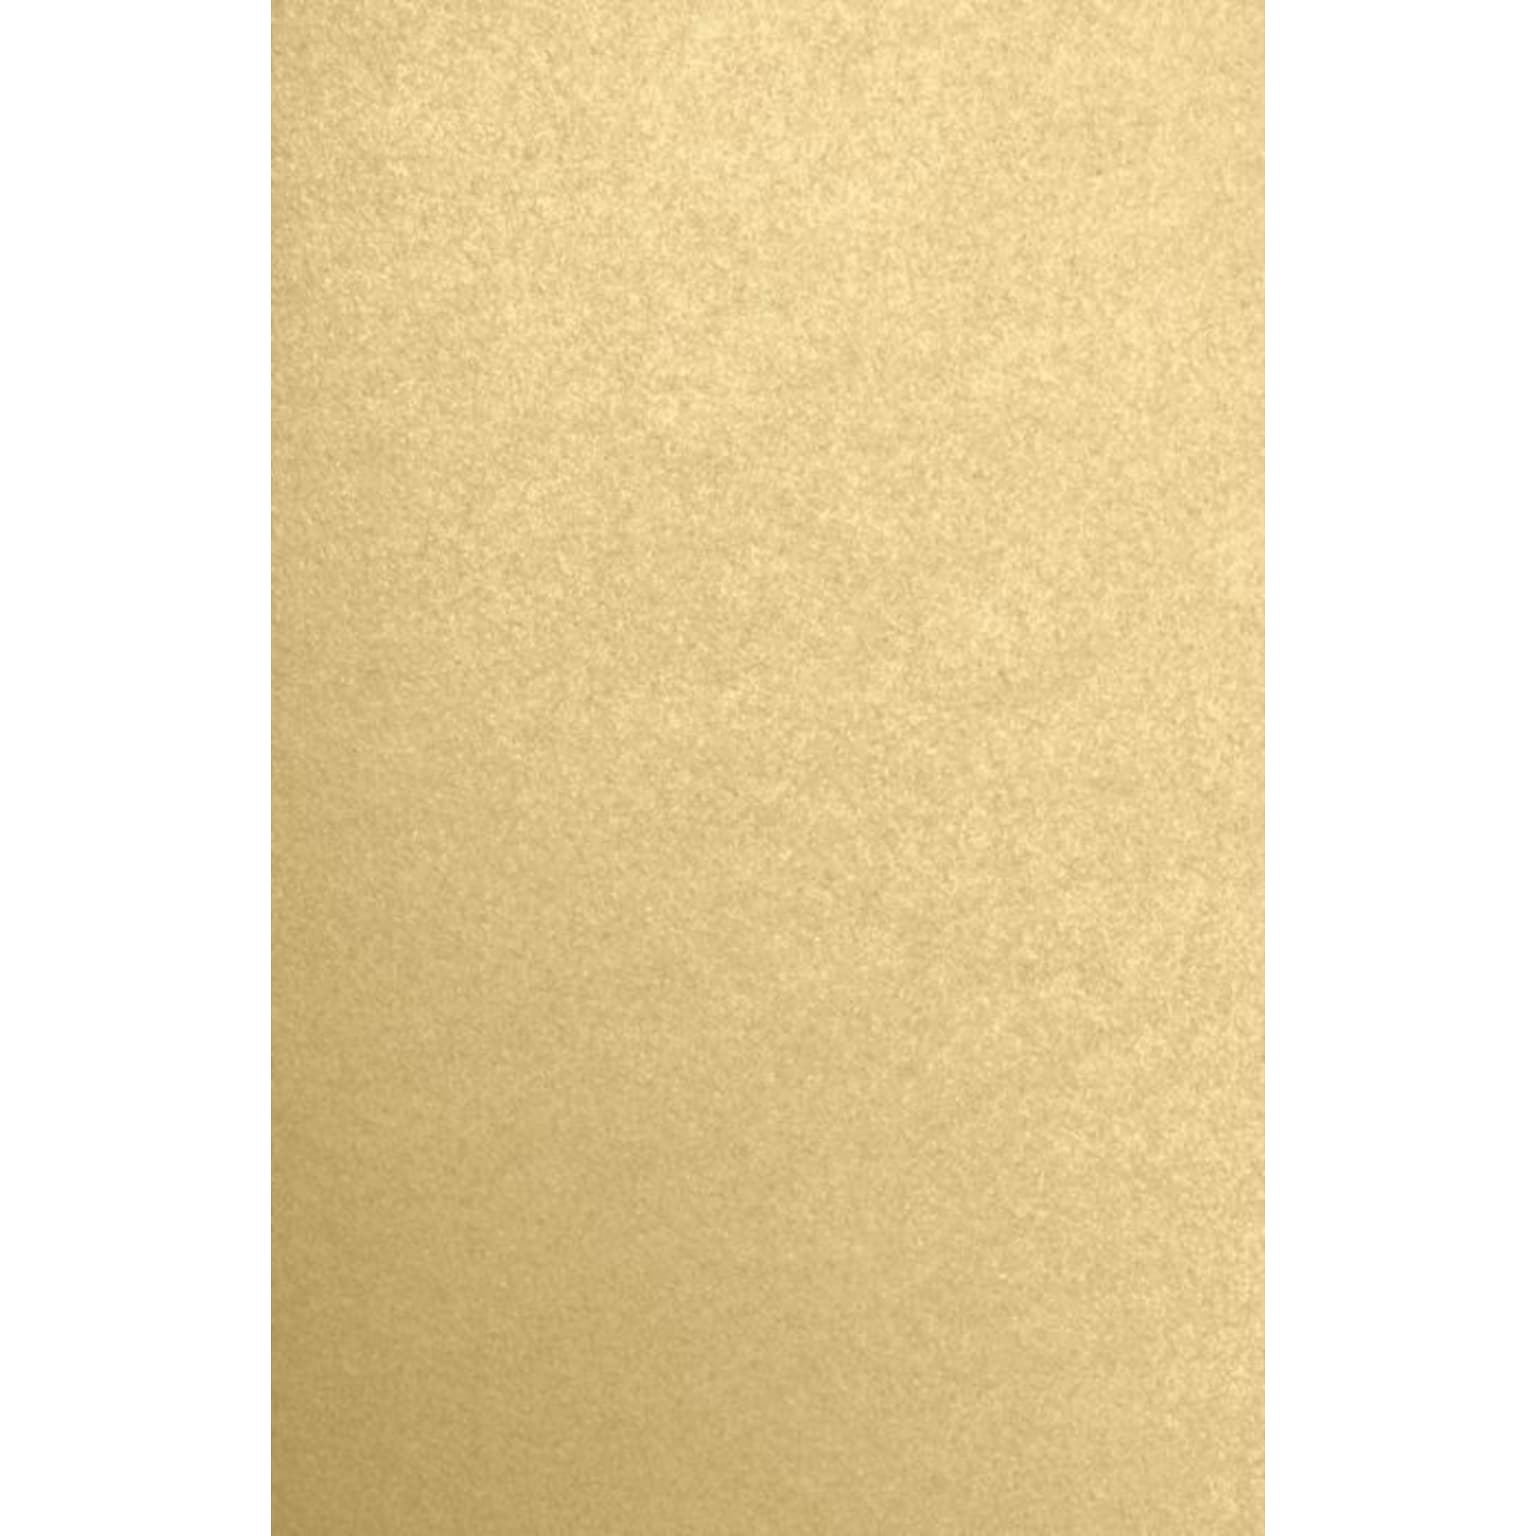 LUX Colored Paper, 32 lbs., 11 x 17, Blonde Metallic, 50/Pack (1117-P-BLON-50)